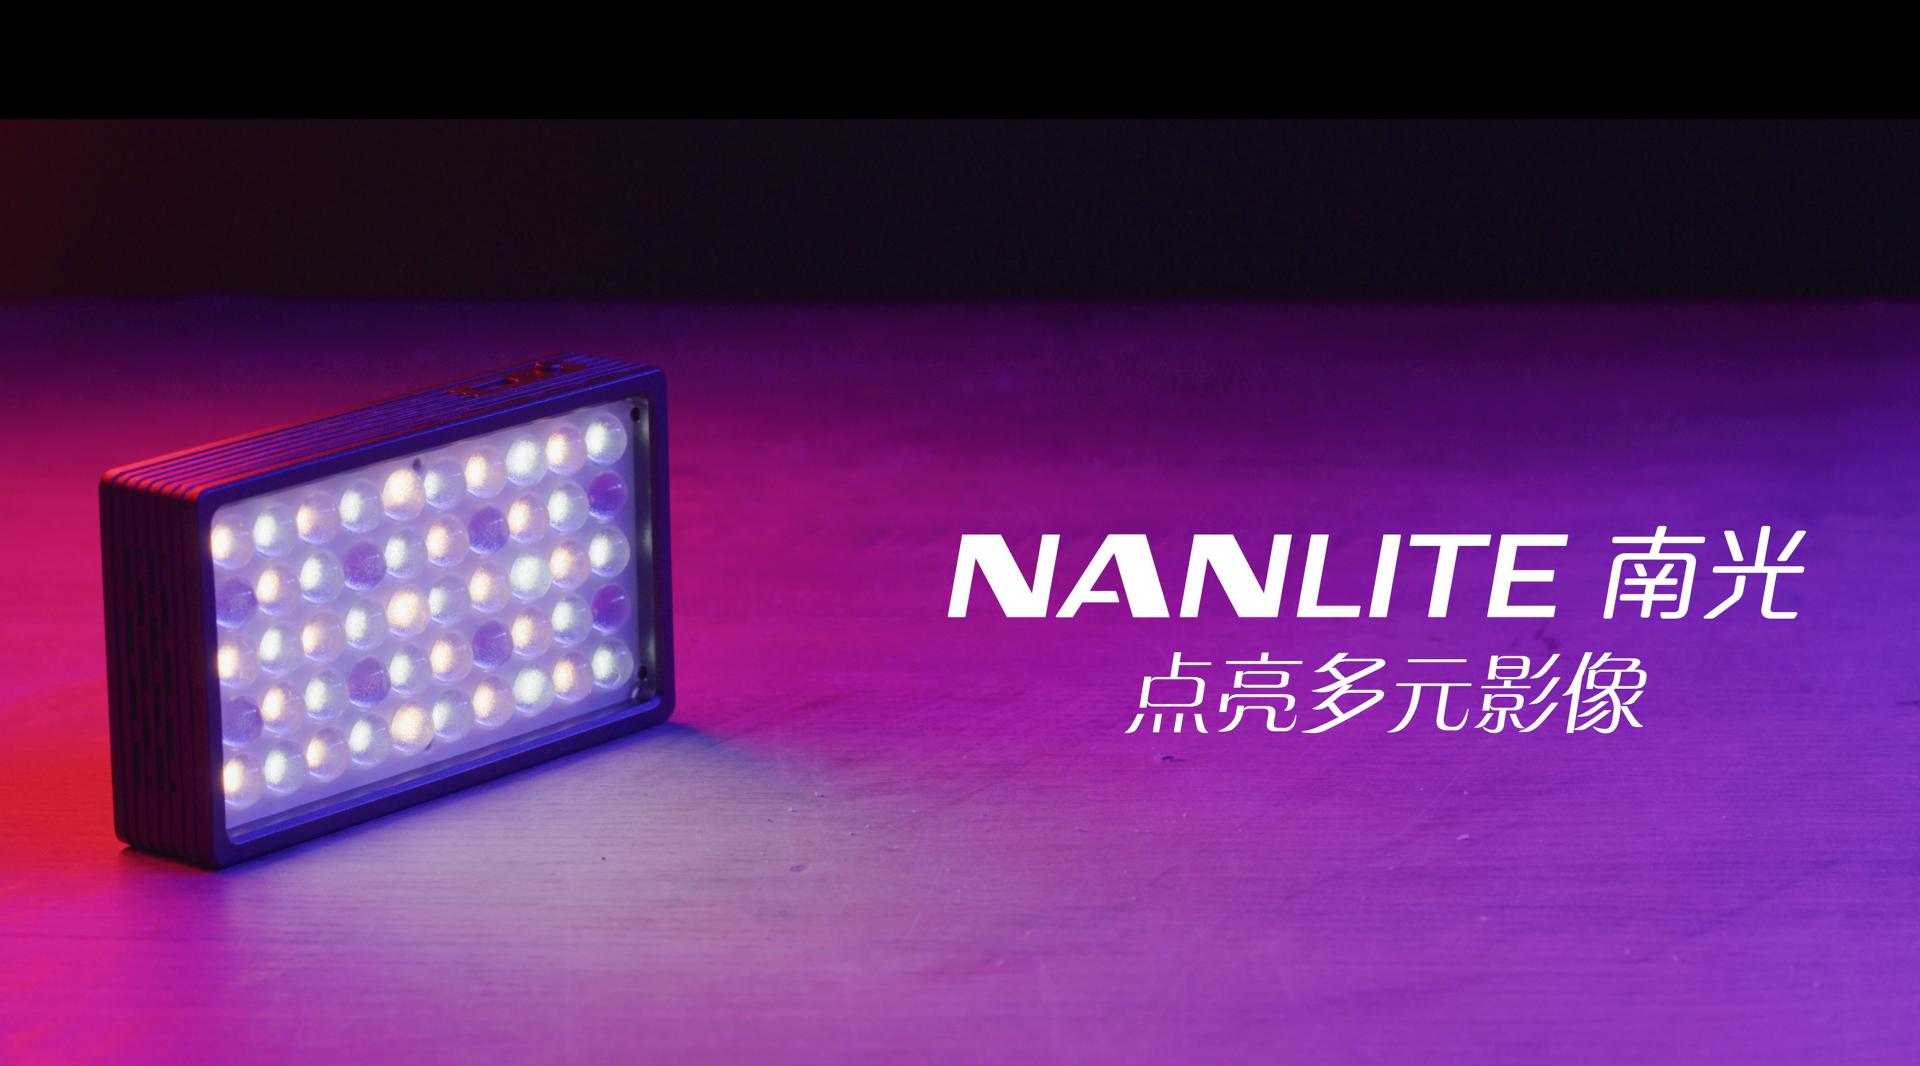 NANLITE南光5C TVC广告